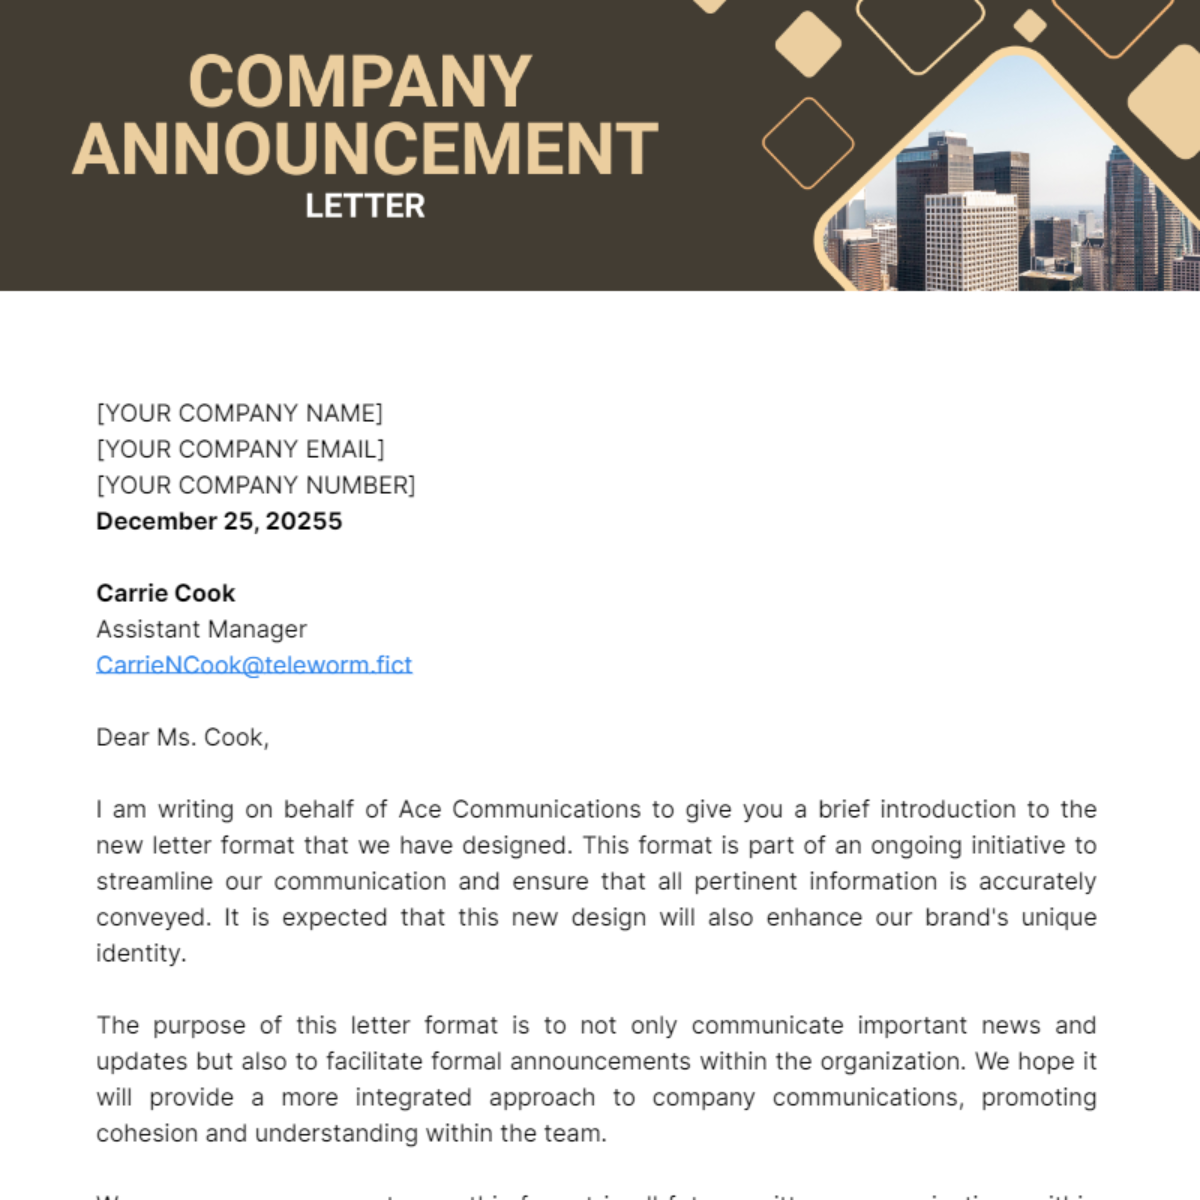 Company Announcement Letter Template